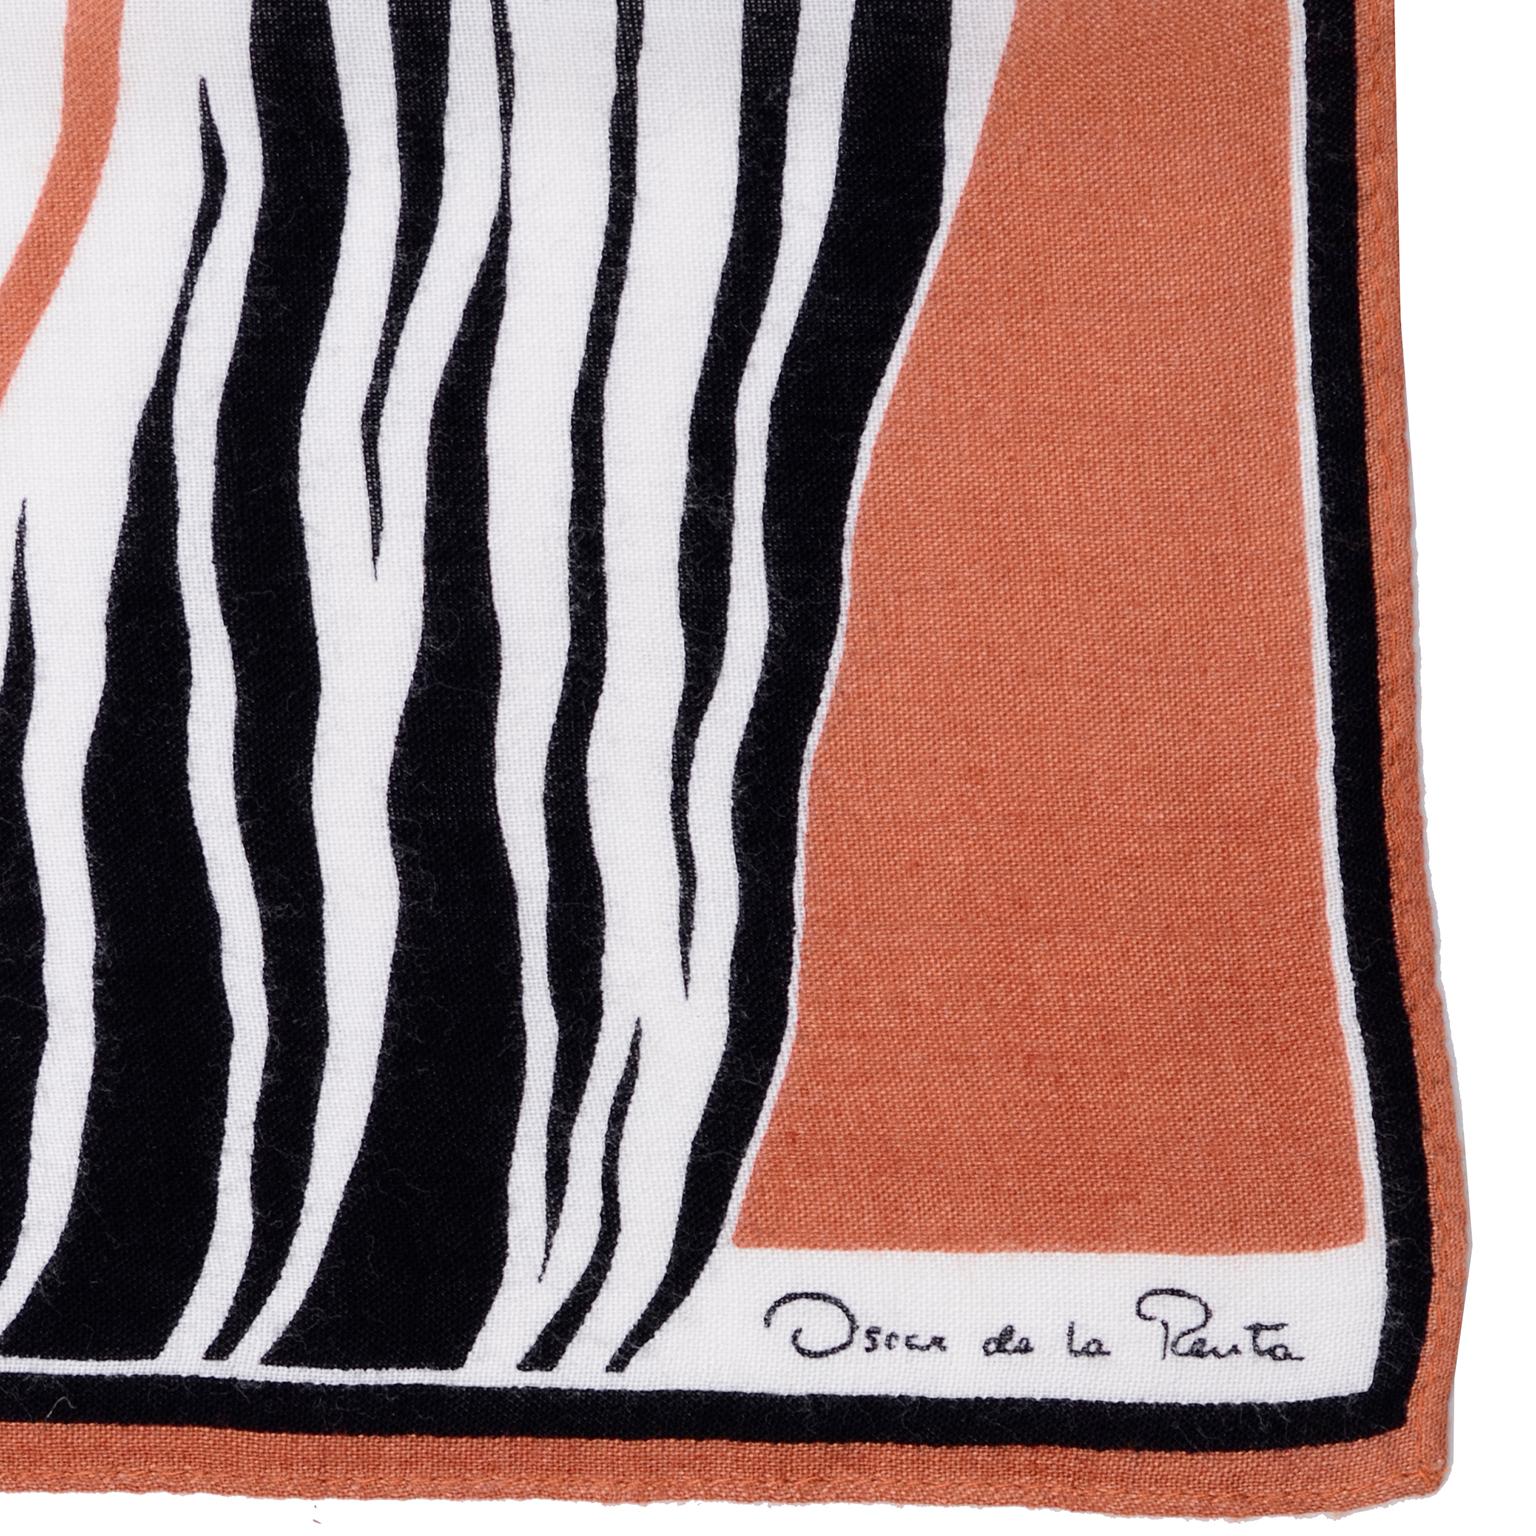 Women's or Men's Oscar de la Renta Vintage Scarf in Tan Brown Black and White Zebra Print